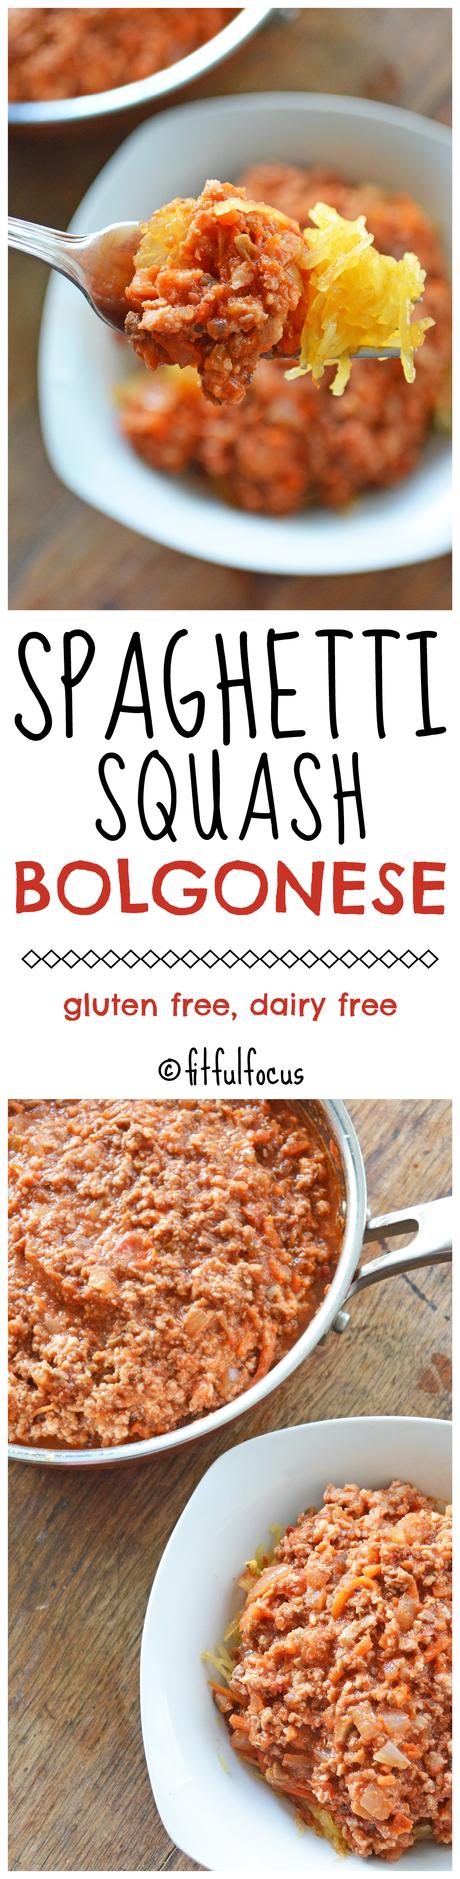 Spaghetti Squash Bolognese (gluten free, dairy free)